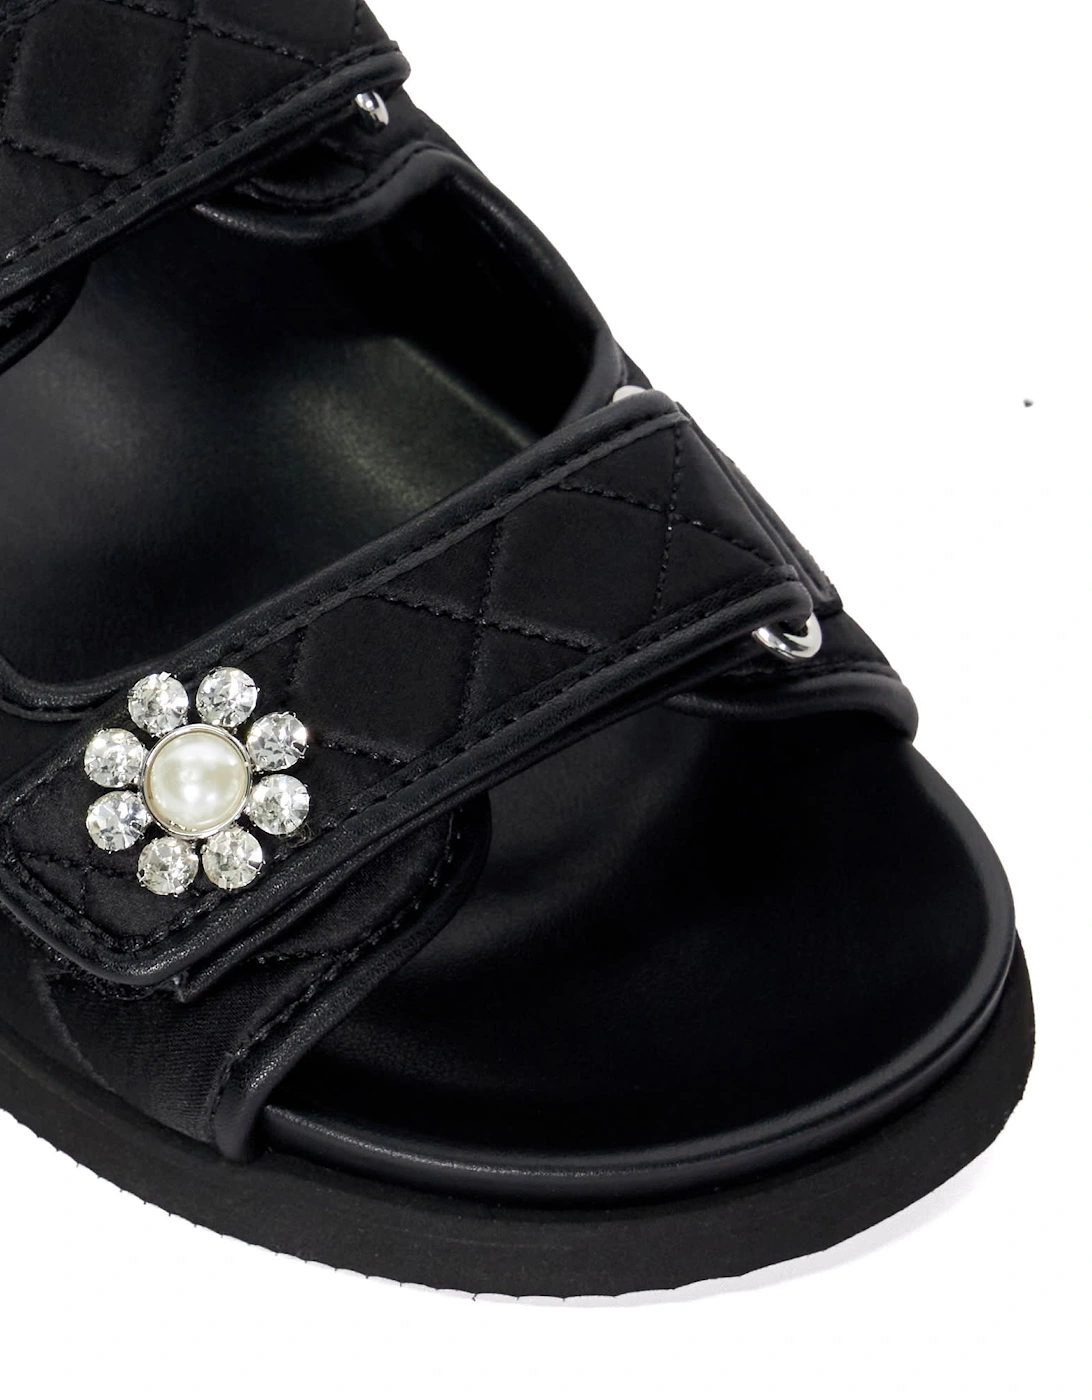 Ladies Lamara - Double Strap Embellished Sandals